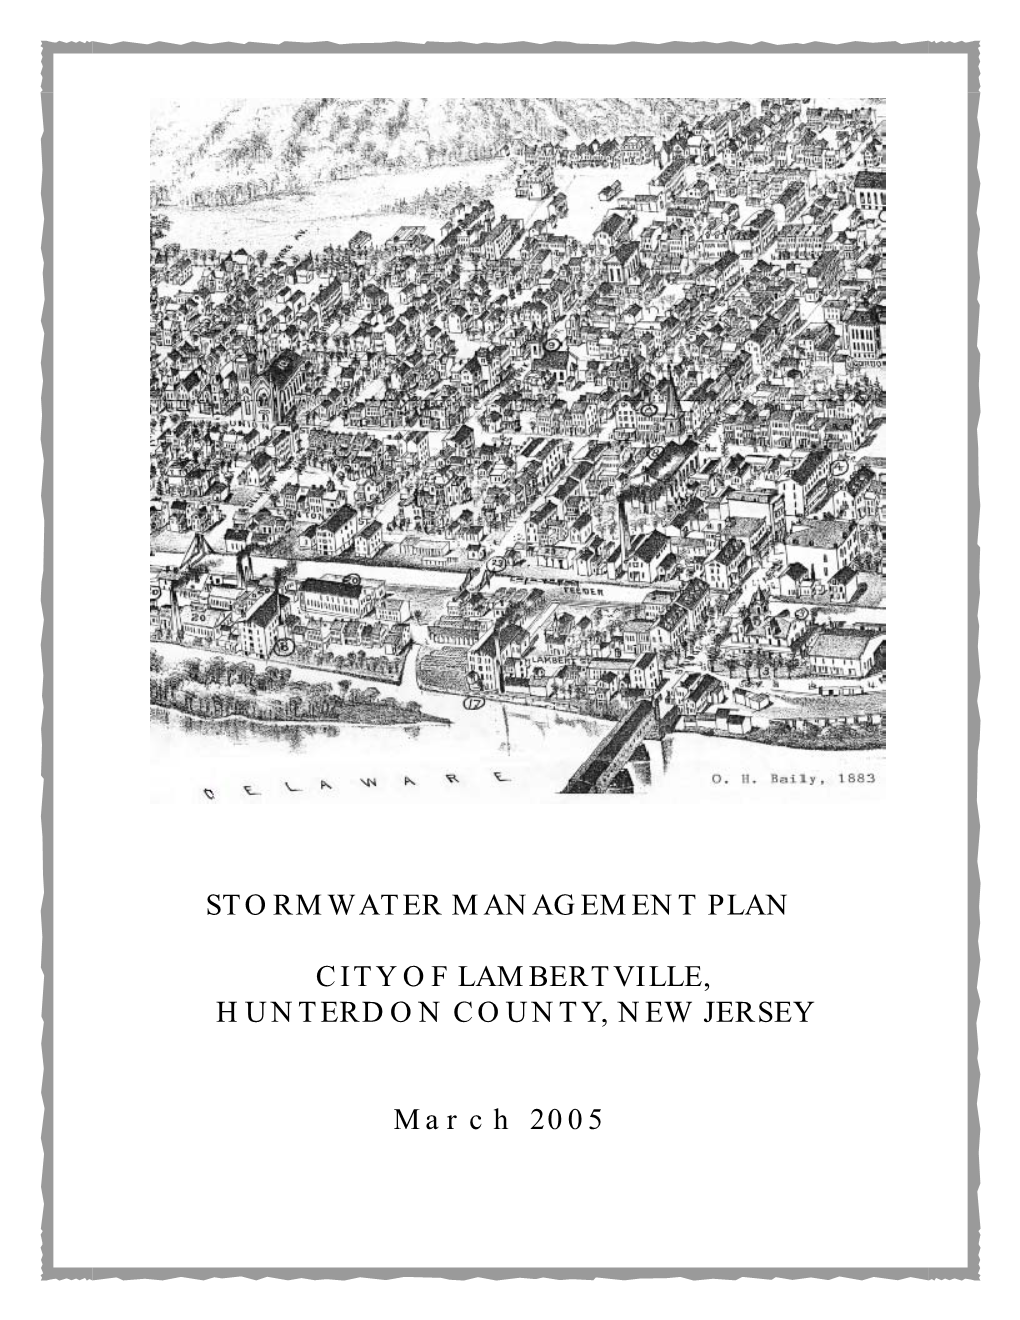 Stormwater Management Plan City of Lambertville Hunterdon County, New Jersey March 2005